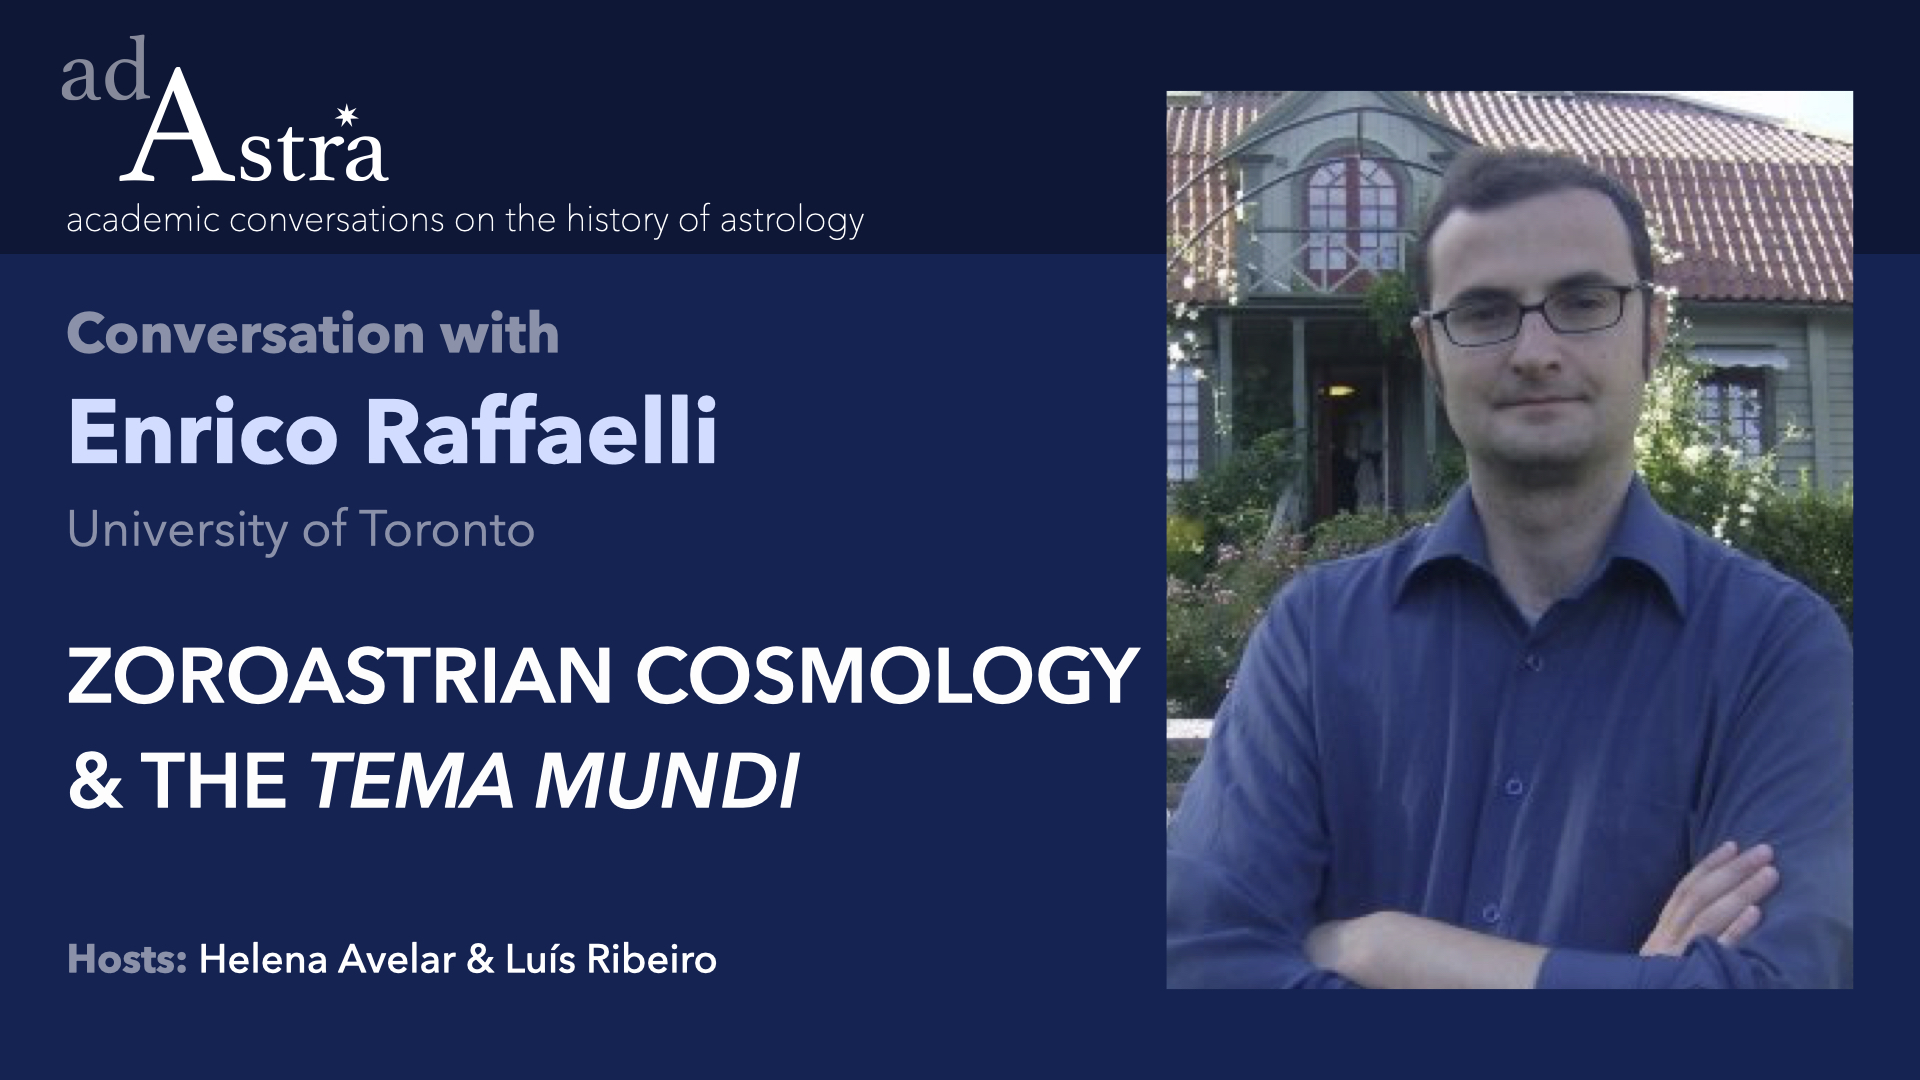 Zoroastrian Cosmology & the Tema Mundi with Enrico Raffaelli